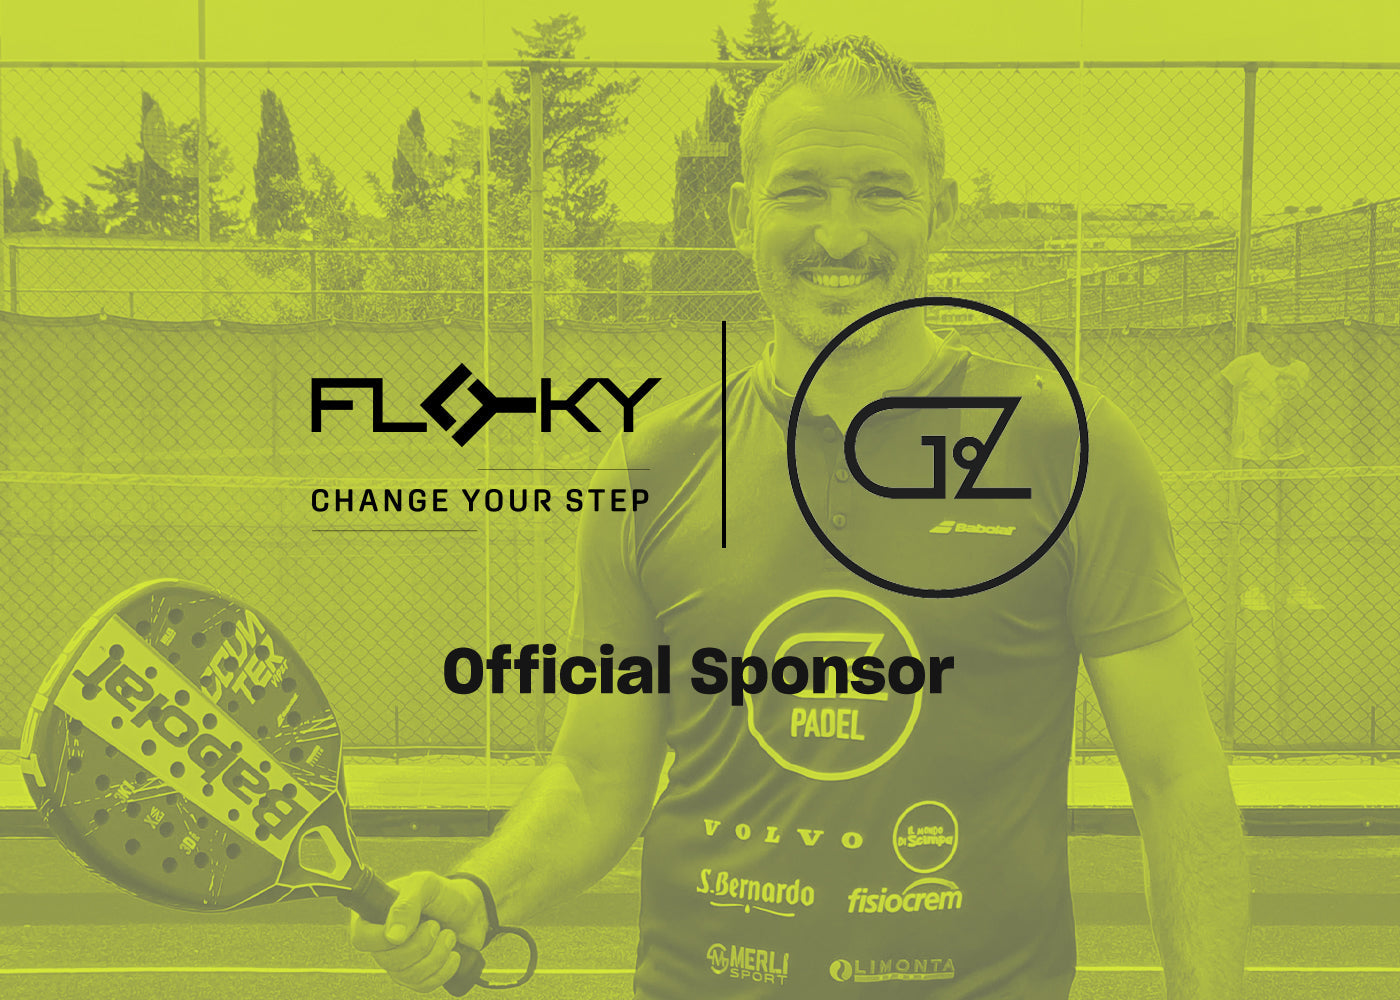 Where padel meets Italian and international sports legends: FLOKY sponsors GZ19 Padel Tour